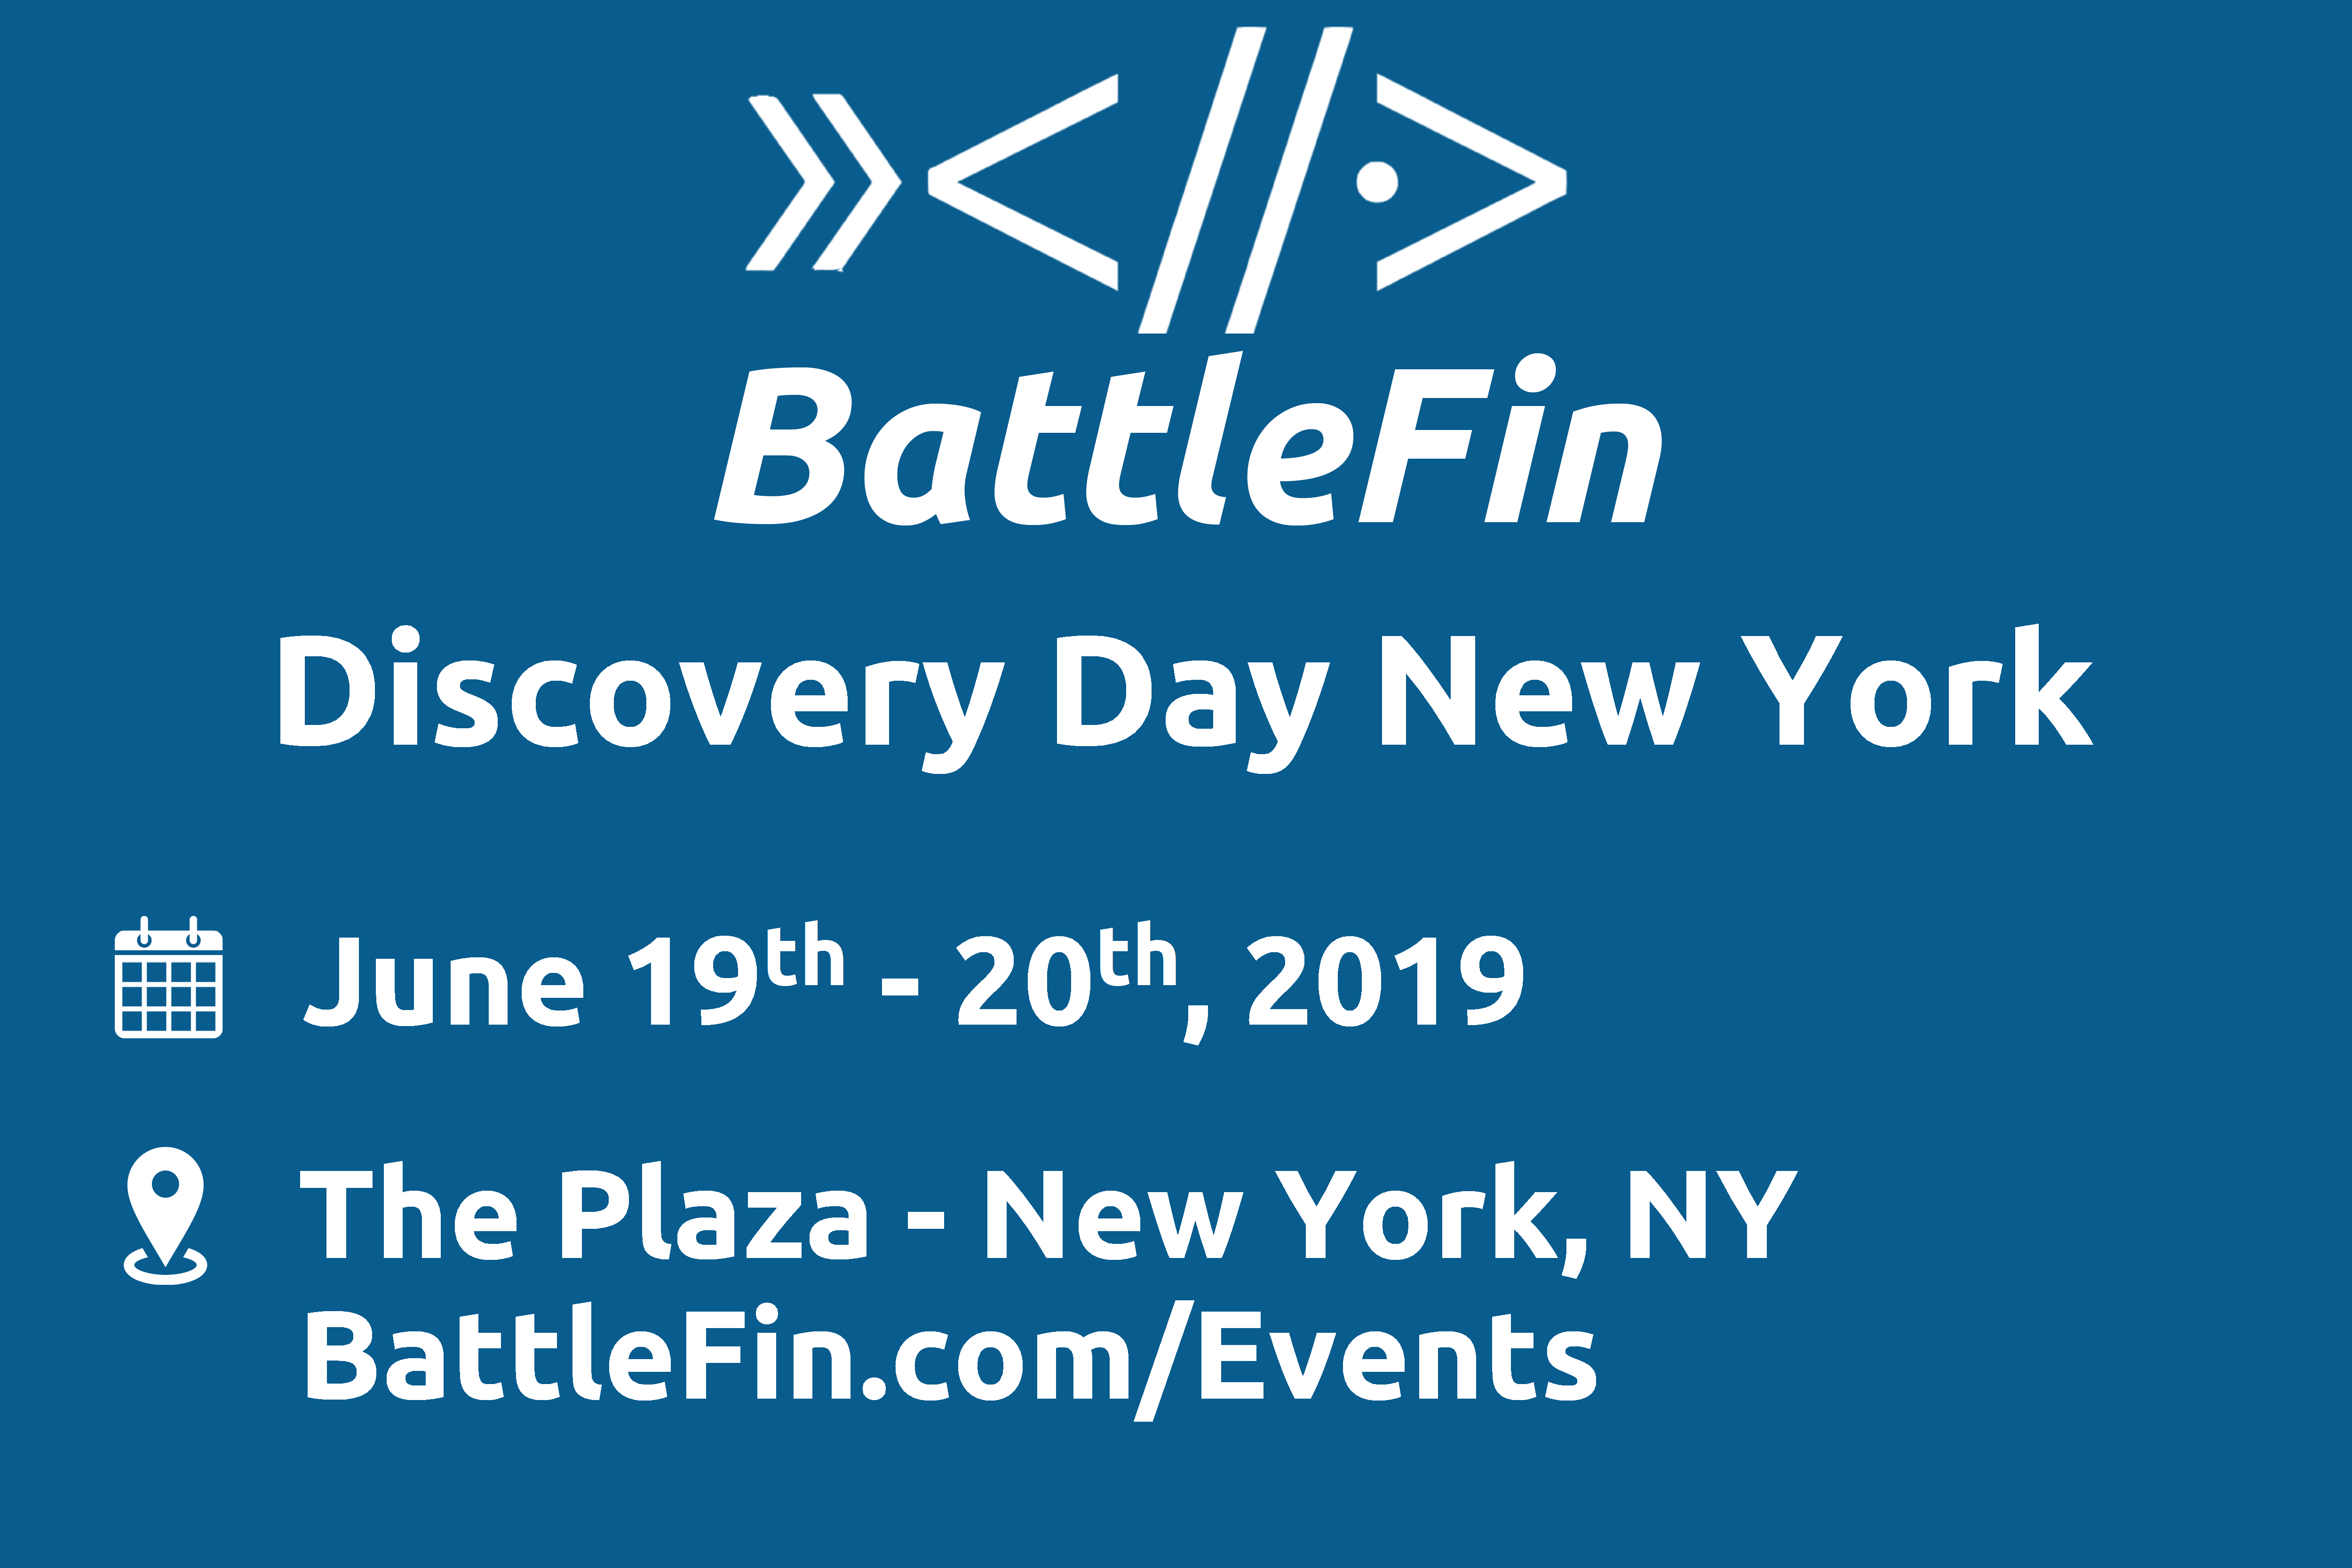 BattleFin Alternative Data Discovery Day New York 2019 organized by BattleFin